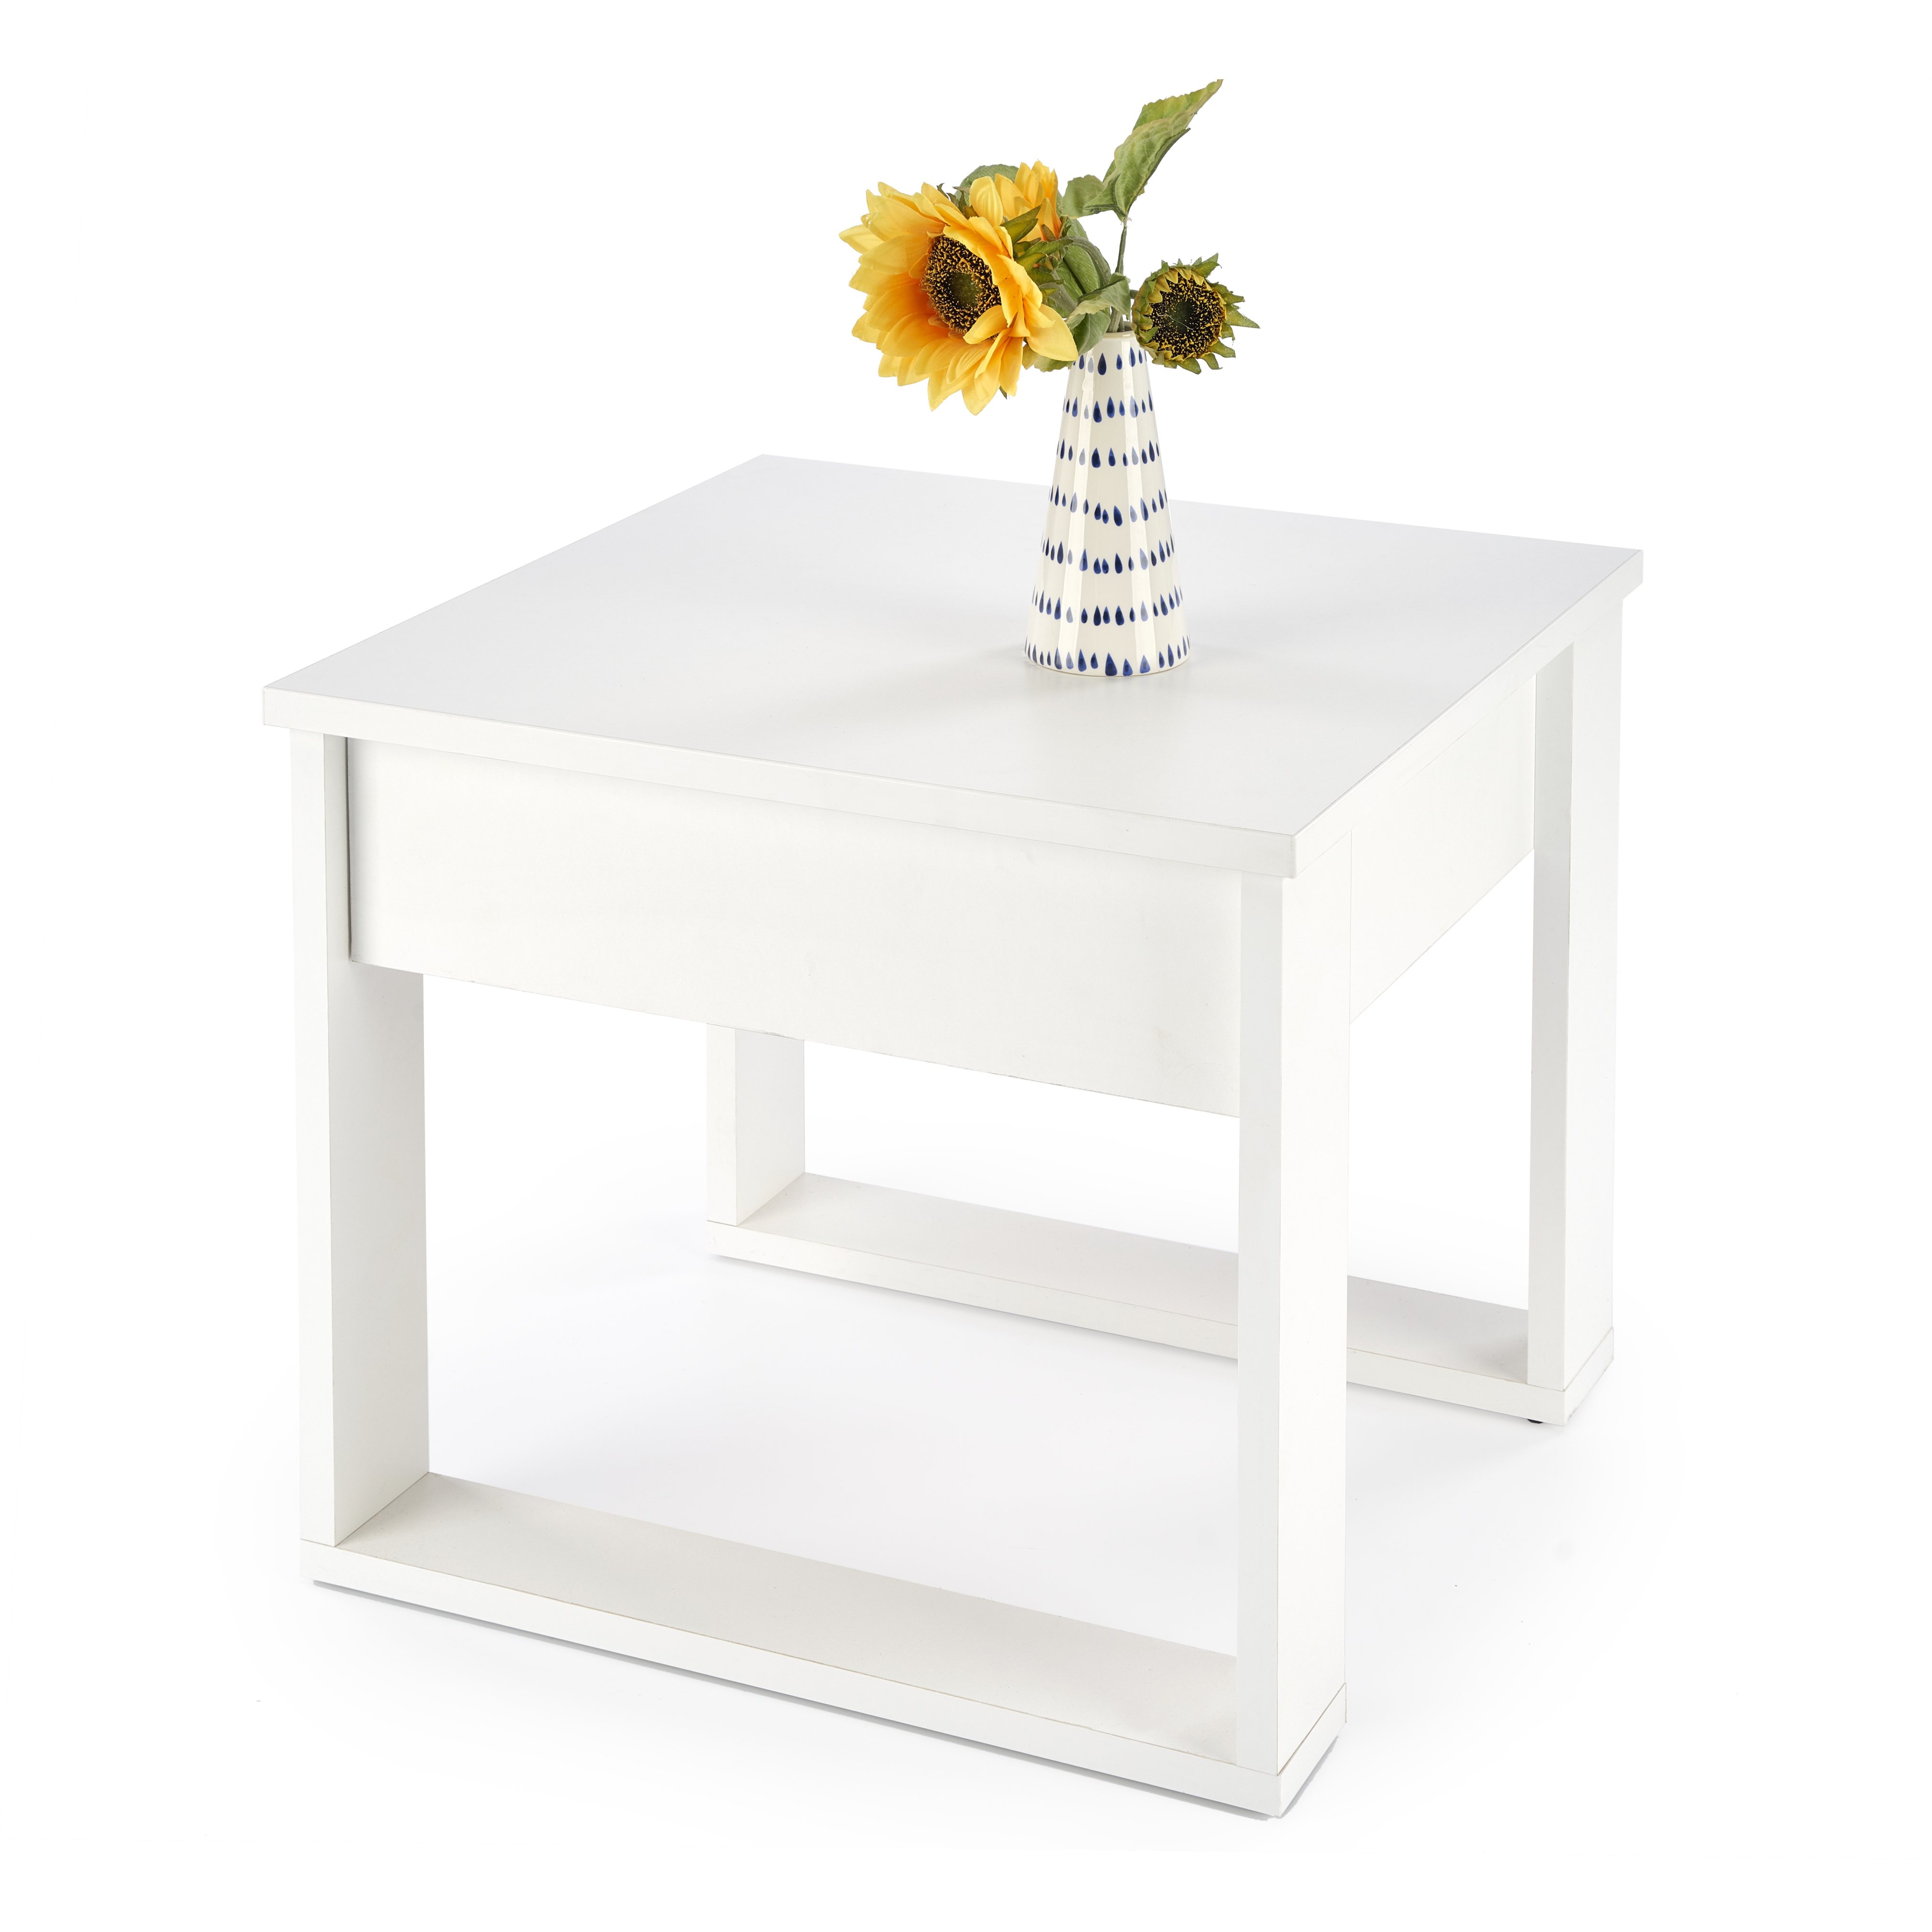 konferenční stolek Nea Čtverec - Barva Bílá nea Čtverec Konferenční stolek Barva Bílá (1p=1szt)